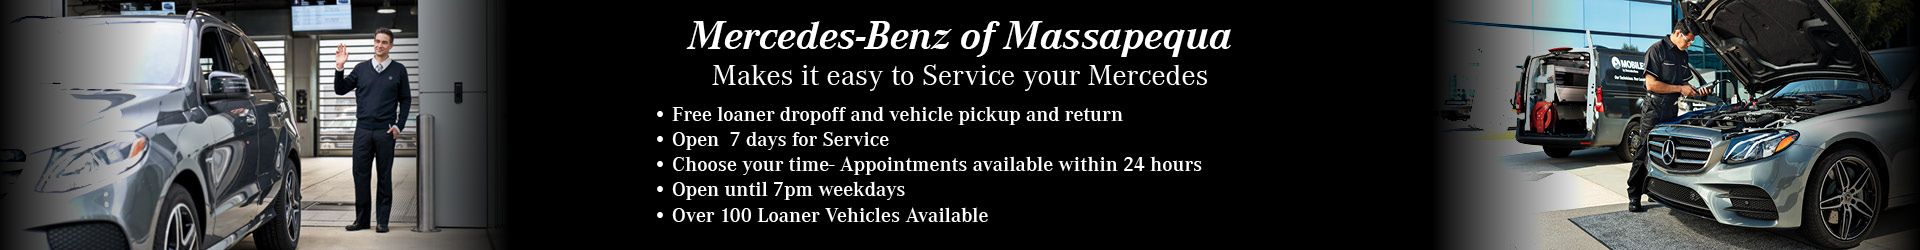 Coupons Mercedes Benz Of Massapequa Service